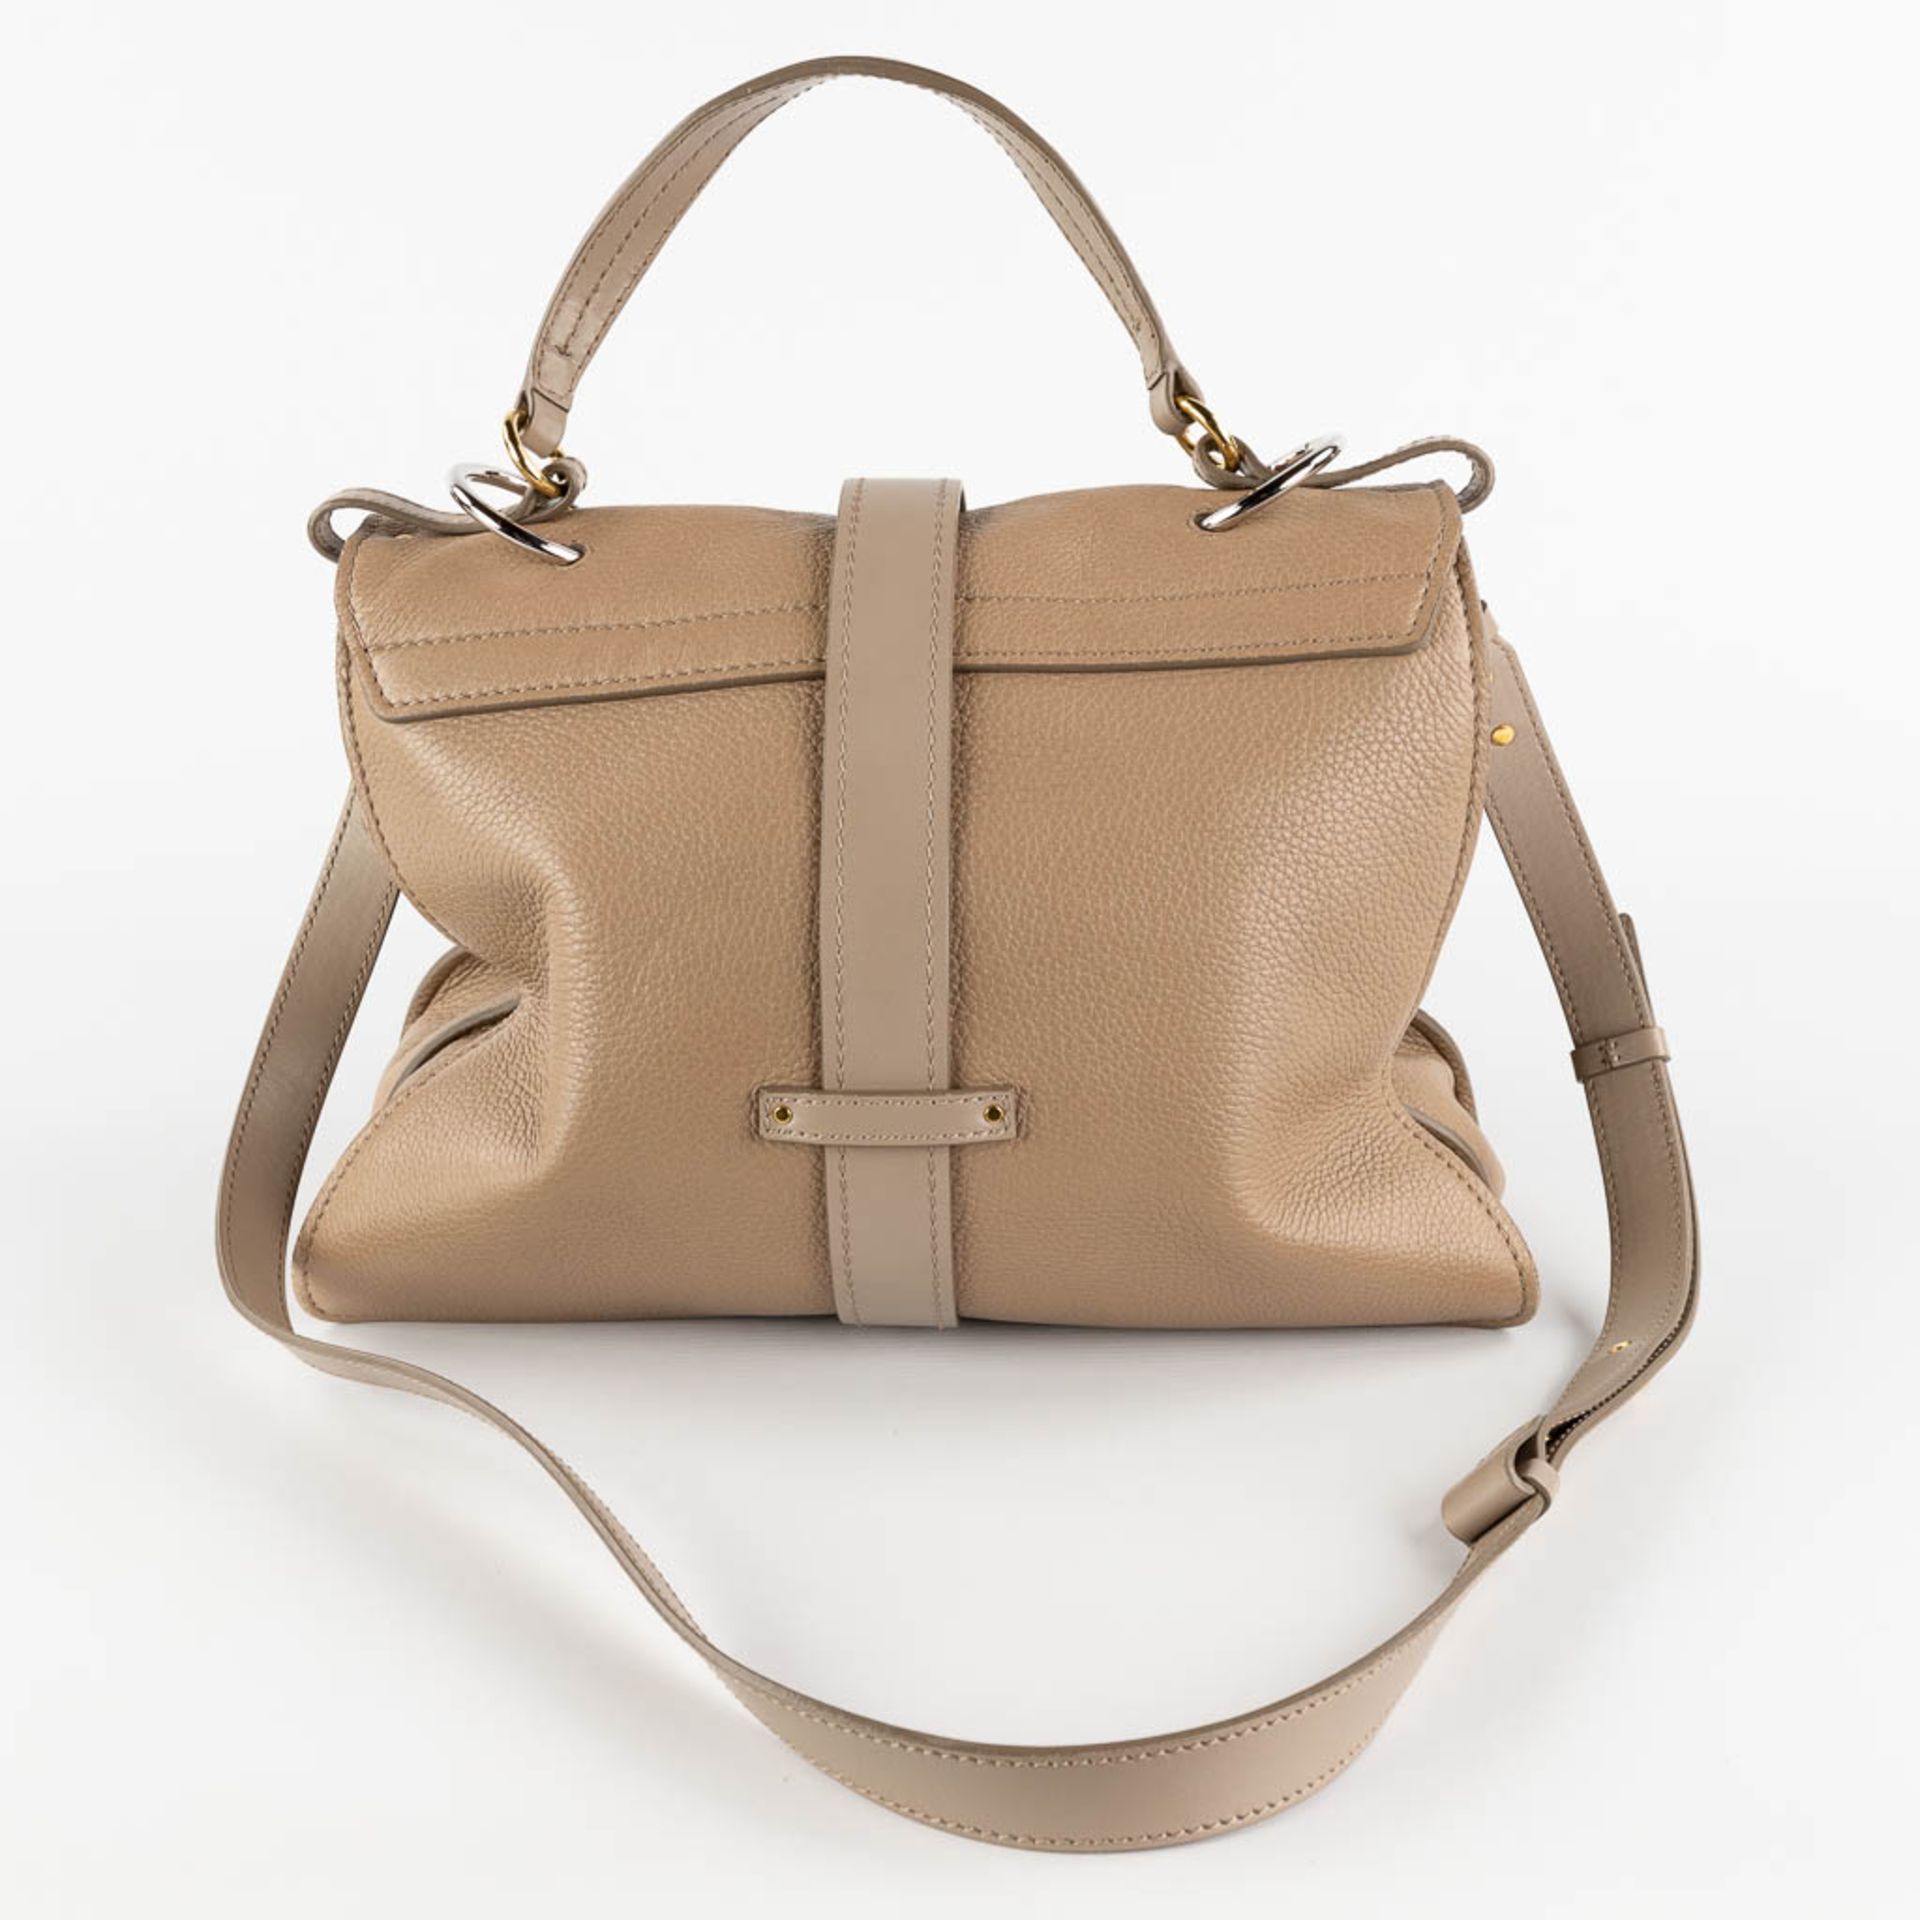 Chloé, a handbag made of brown leather. (W:38 x H:32 cm) - Bild 5 aus 19